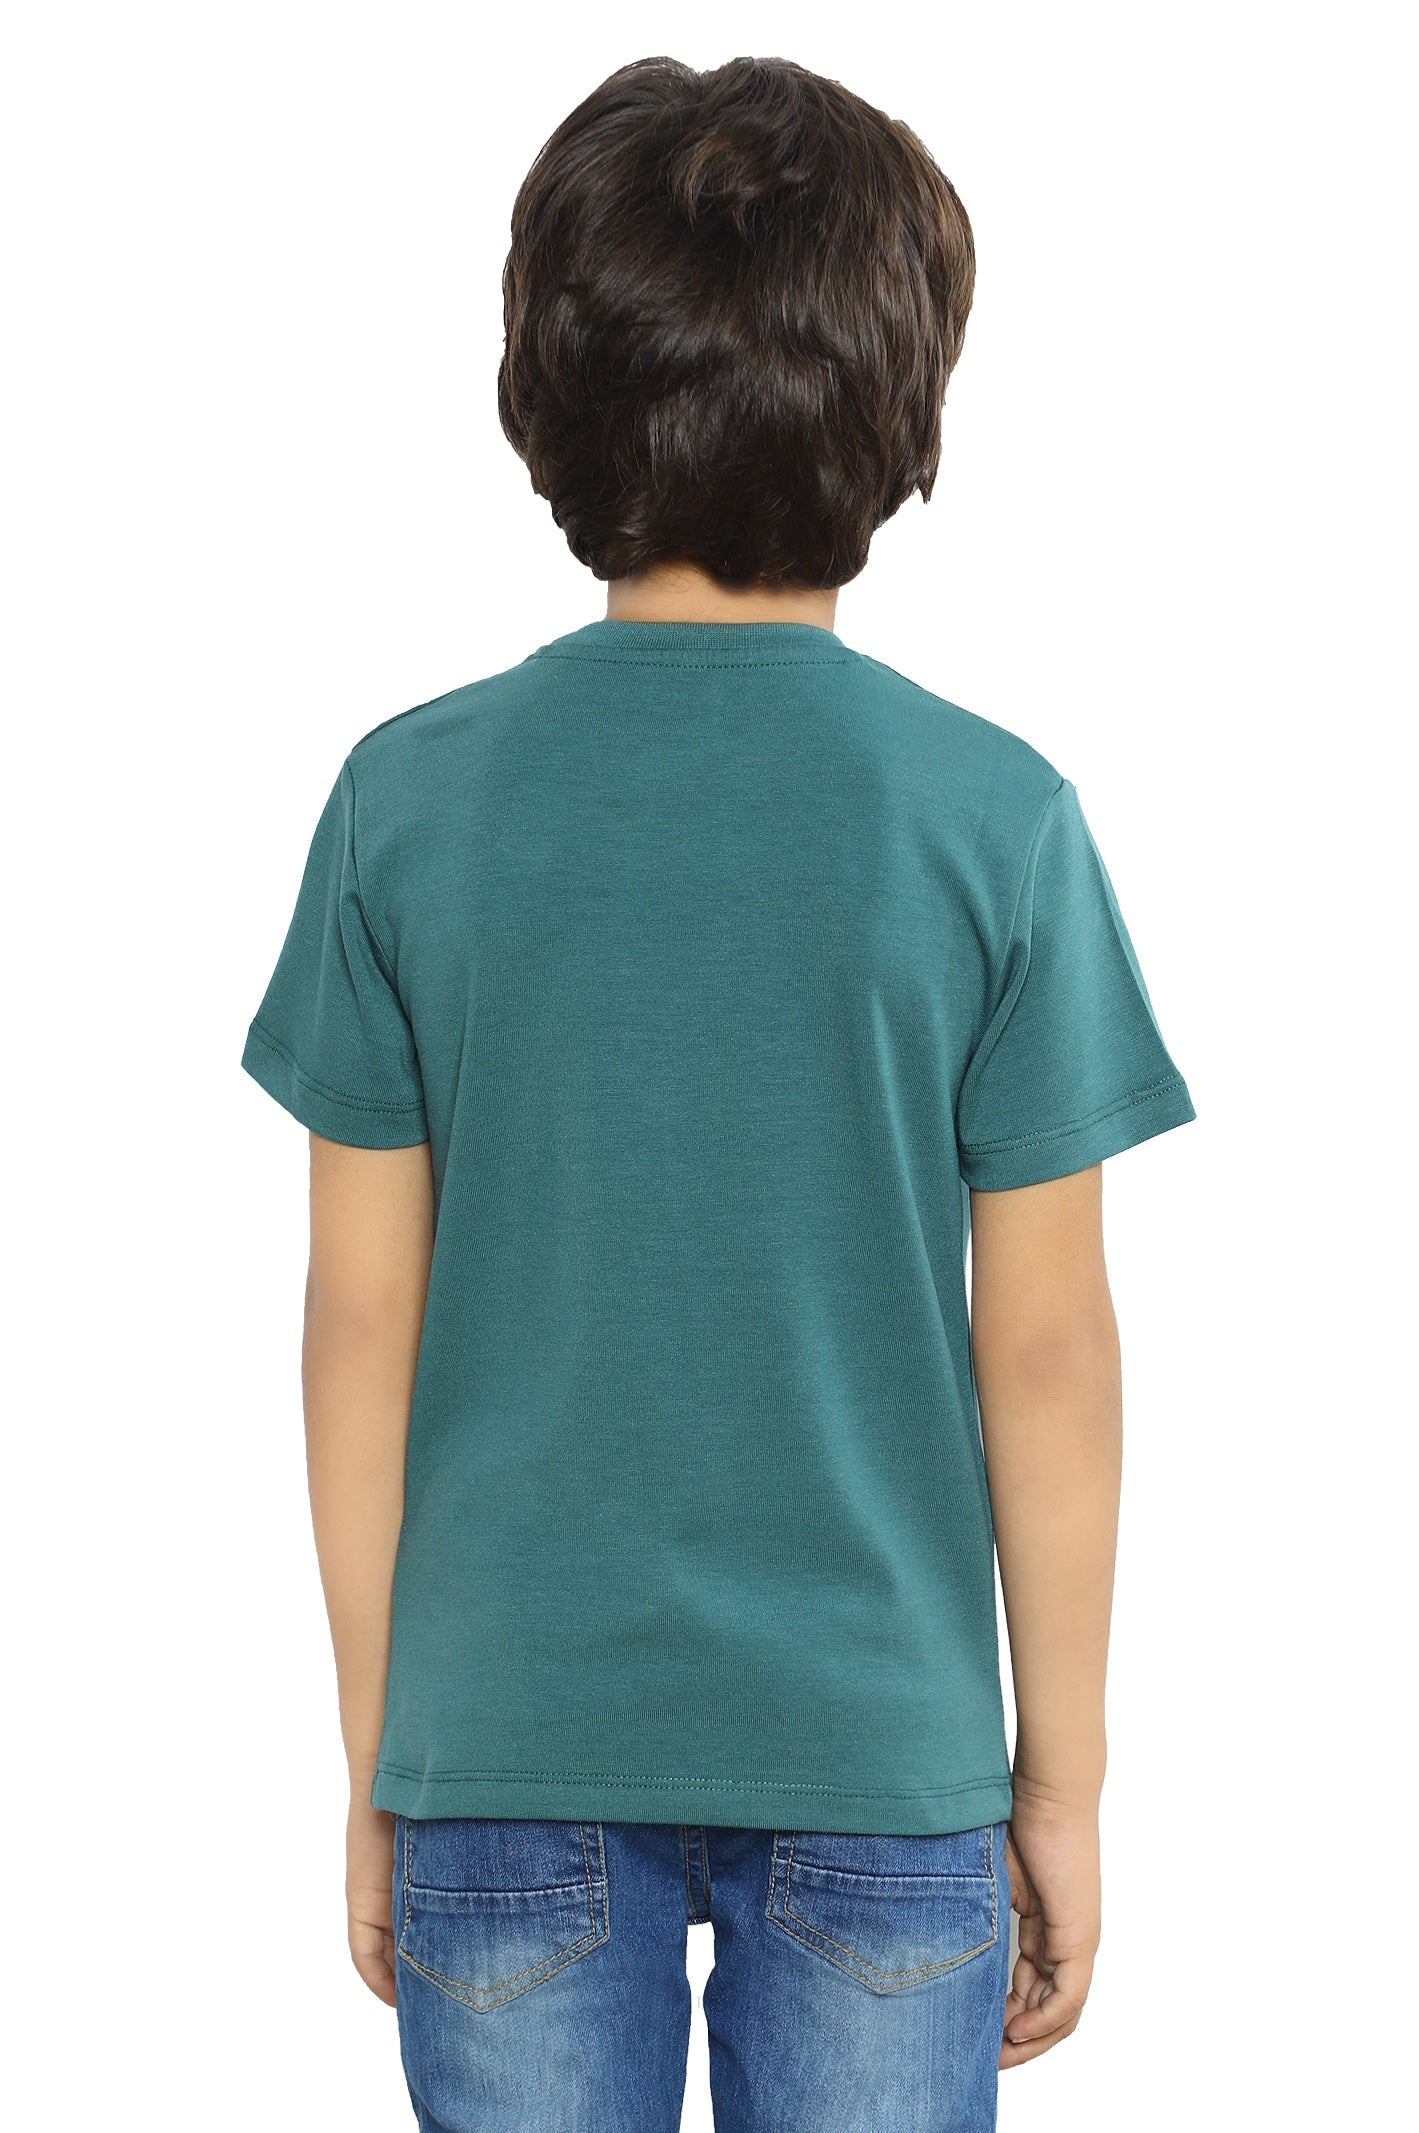 Boys Round Neck T-Shirt SKU: KBA-0429-GREEN - Diners